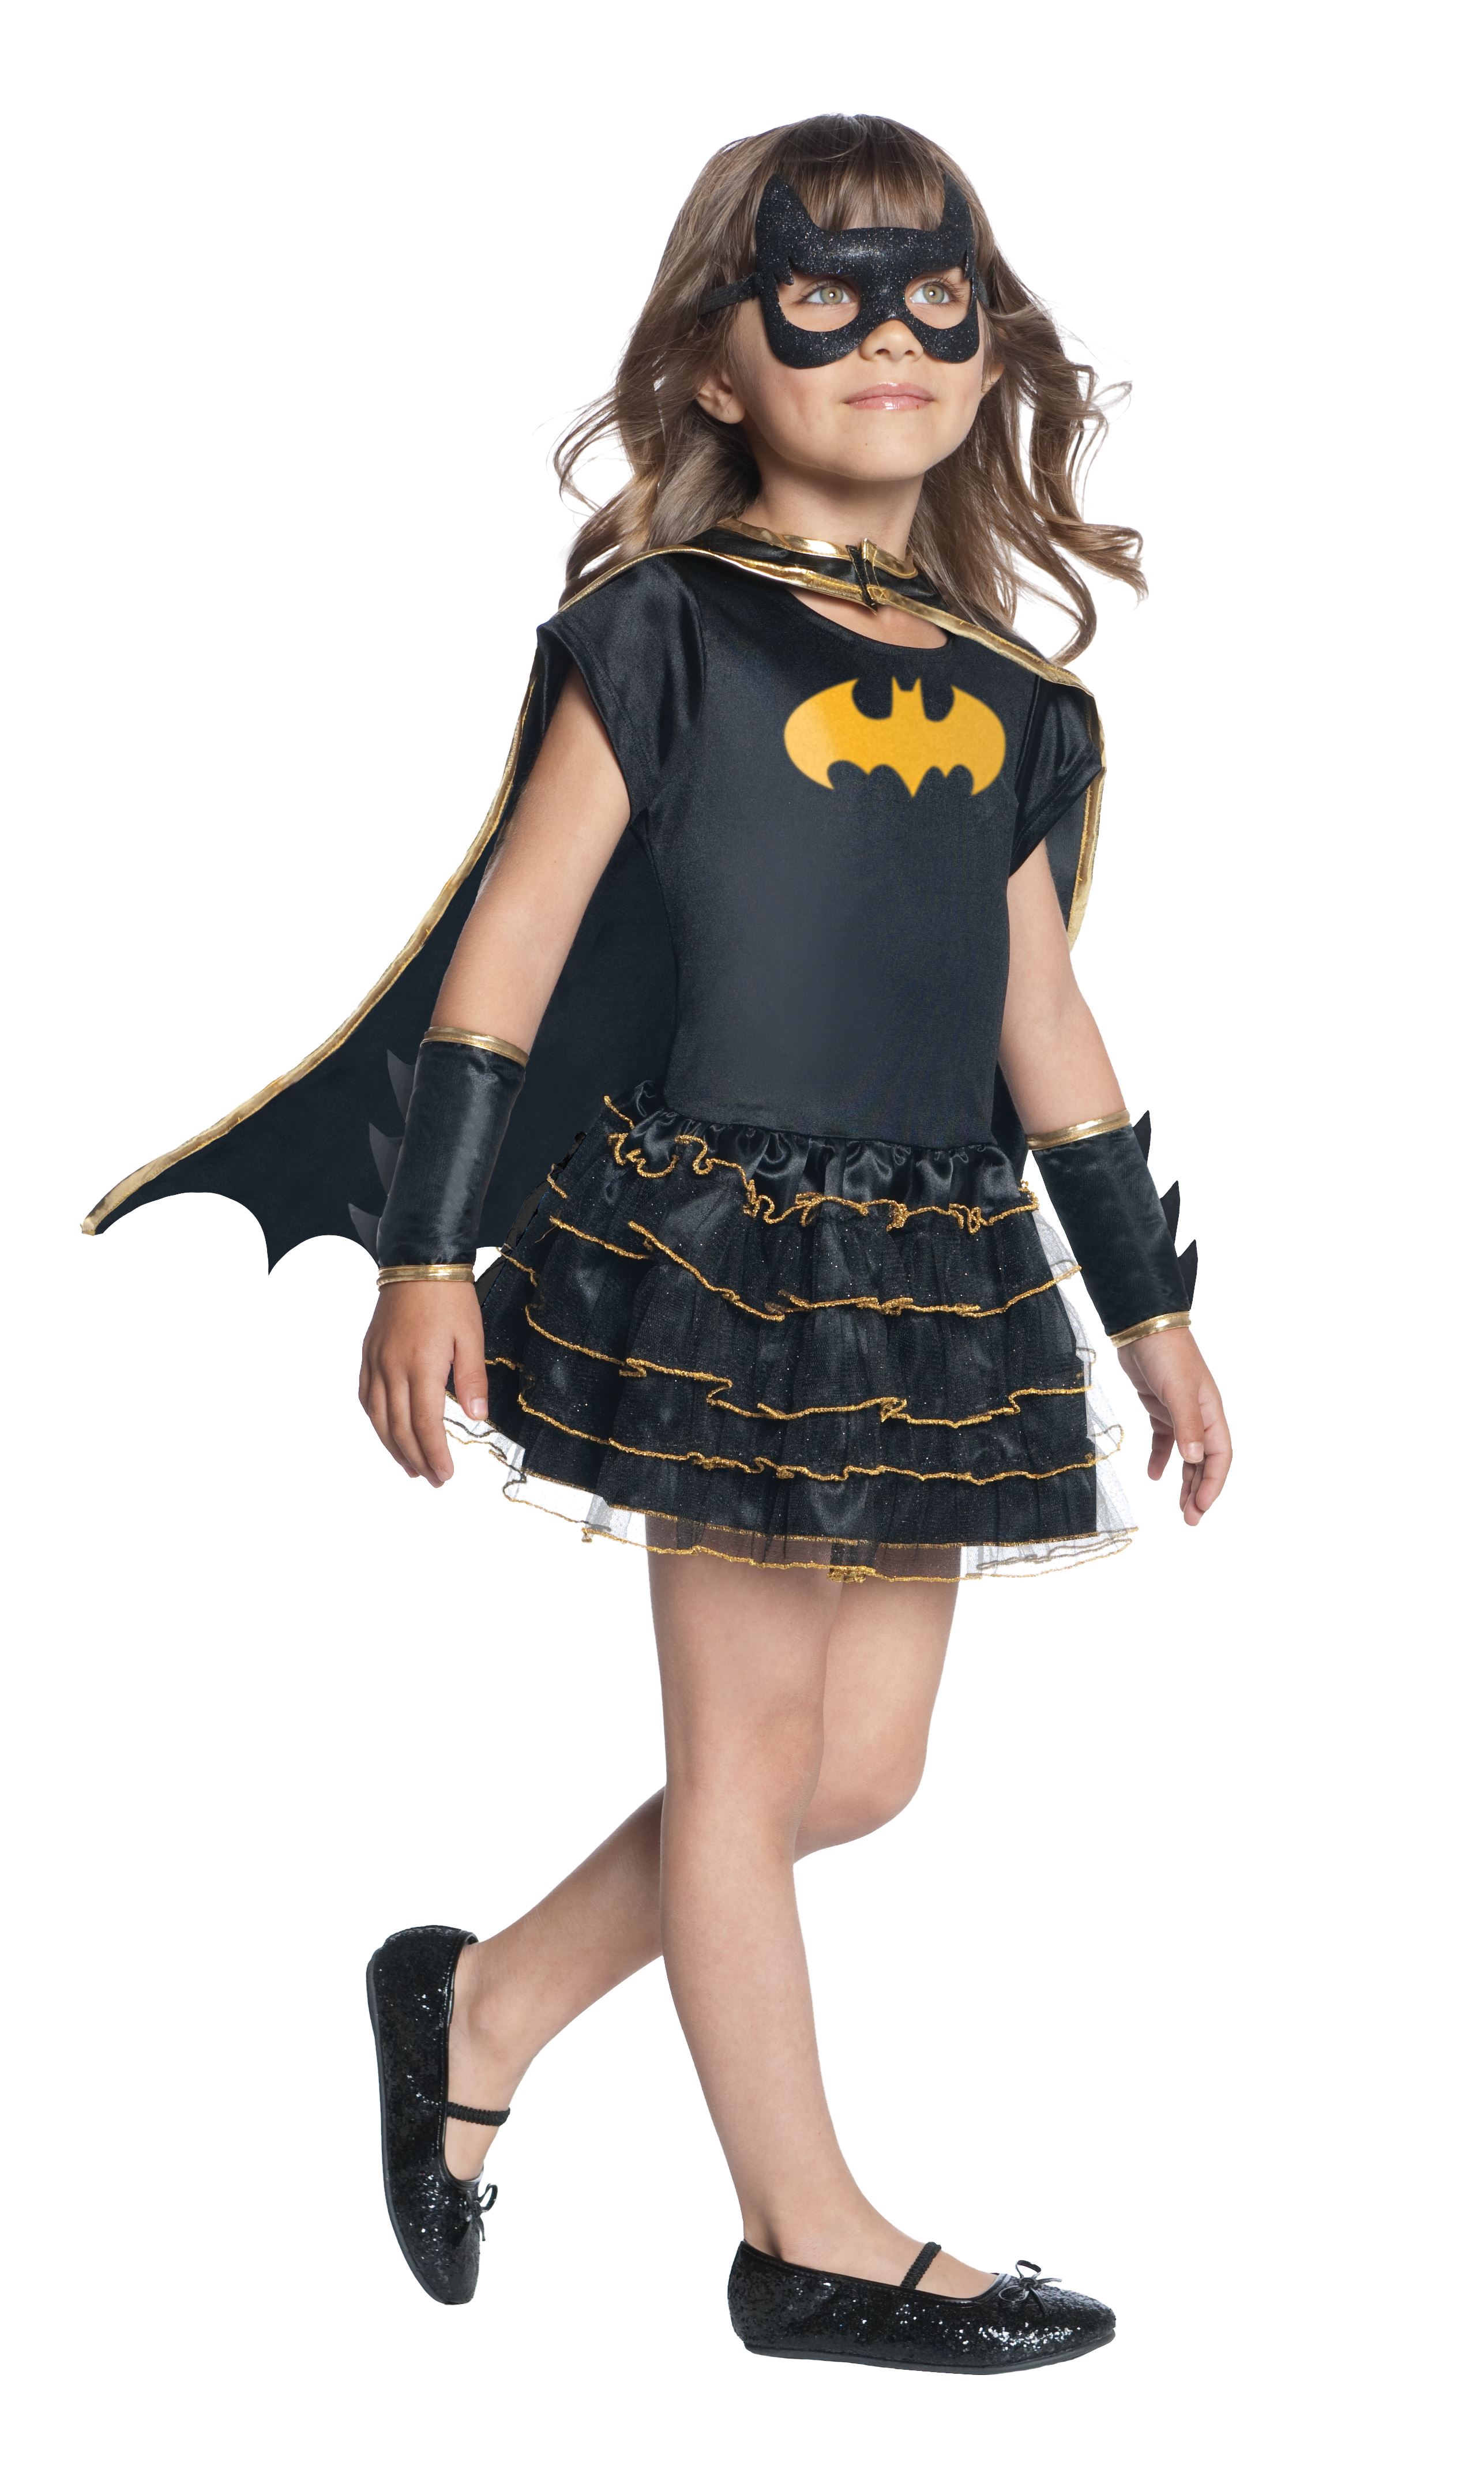 Super Hero Batgirl Halloween Costume Toddler Size 2T-4T